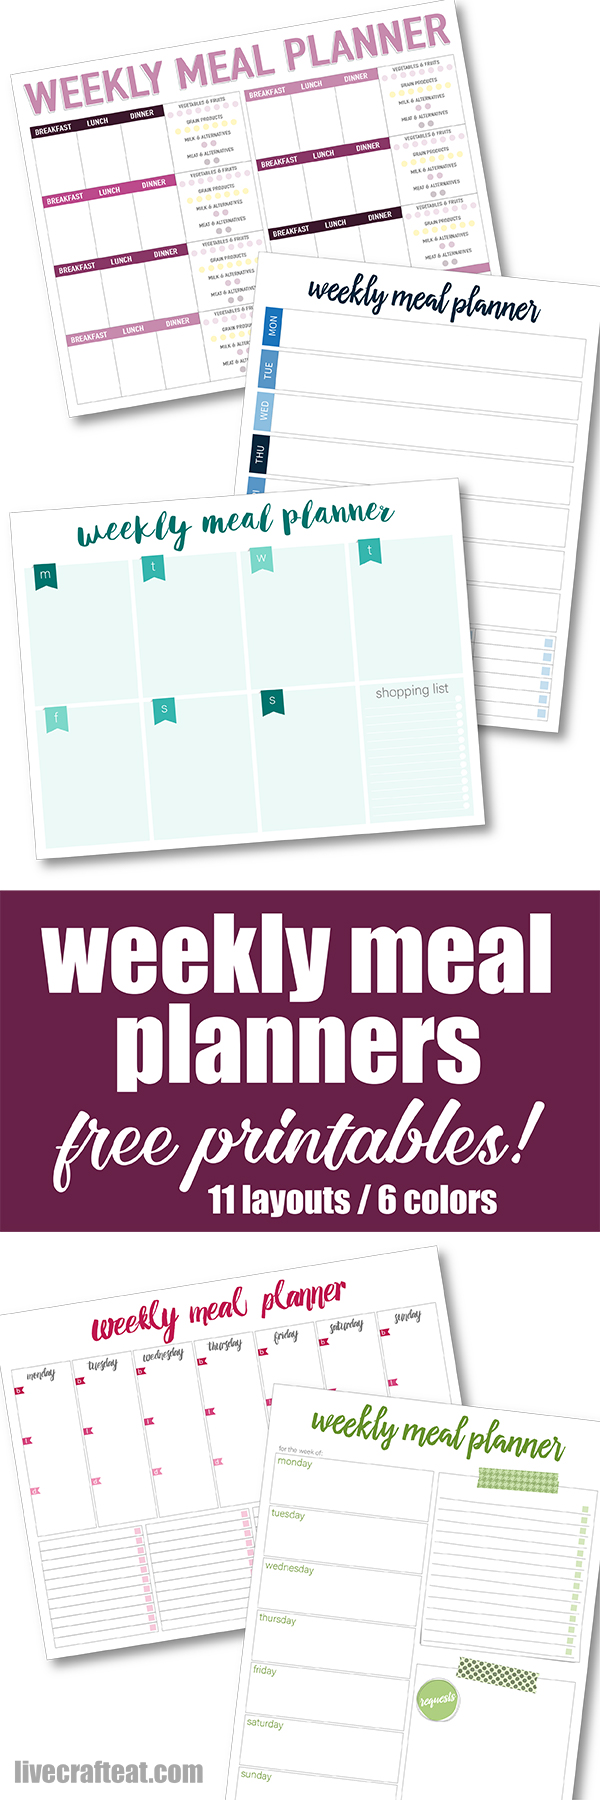 weekly meal planner pinterest image